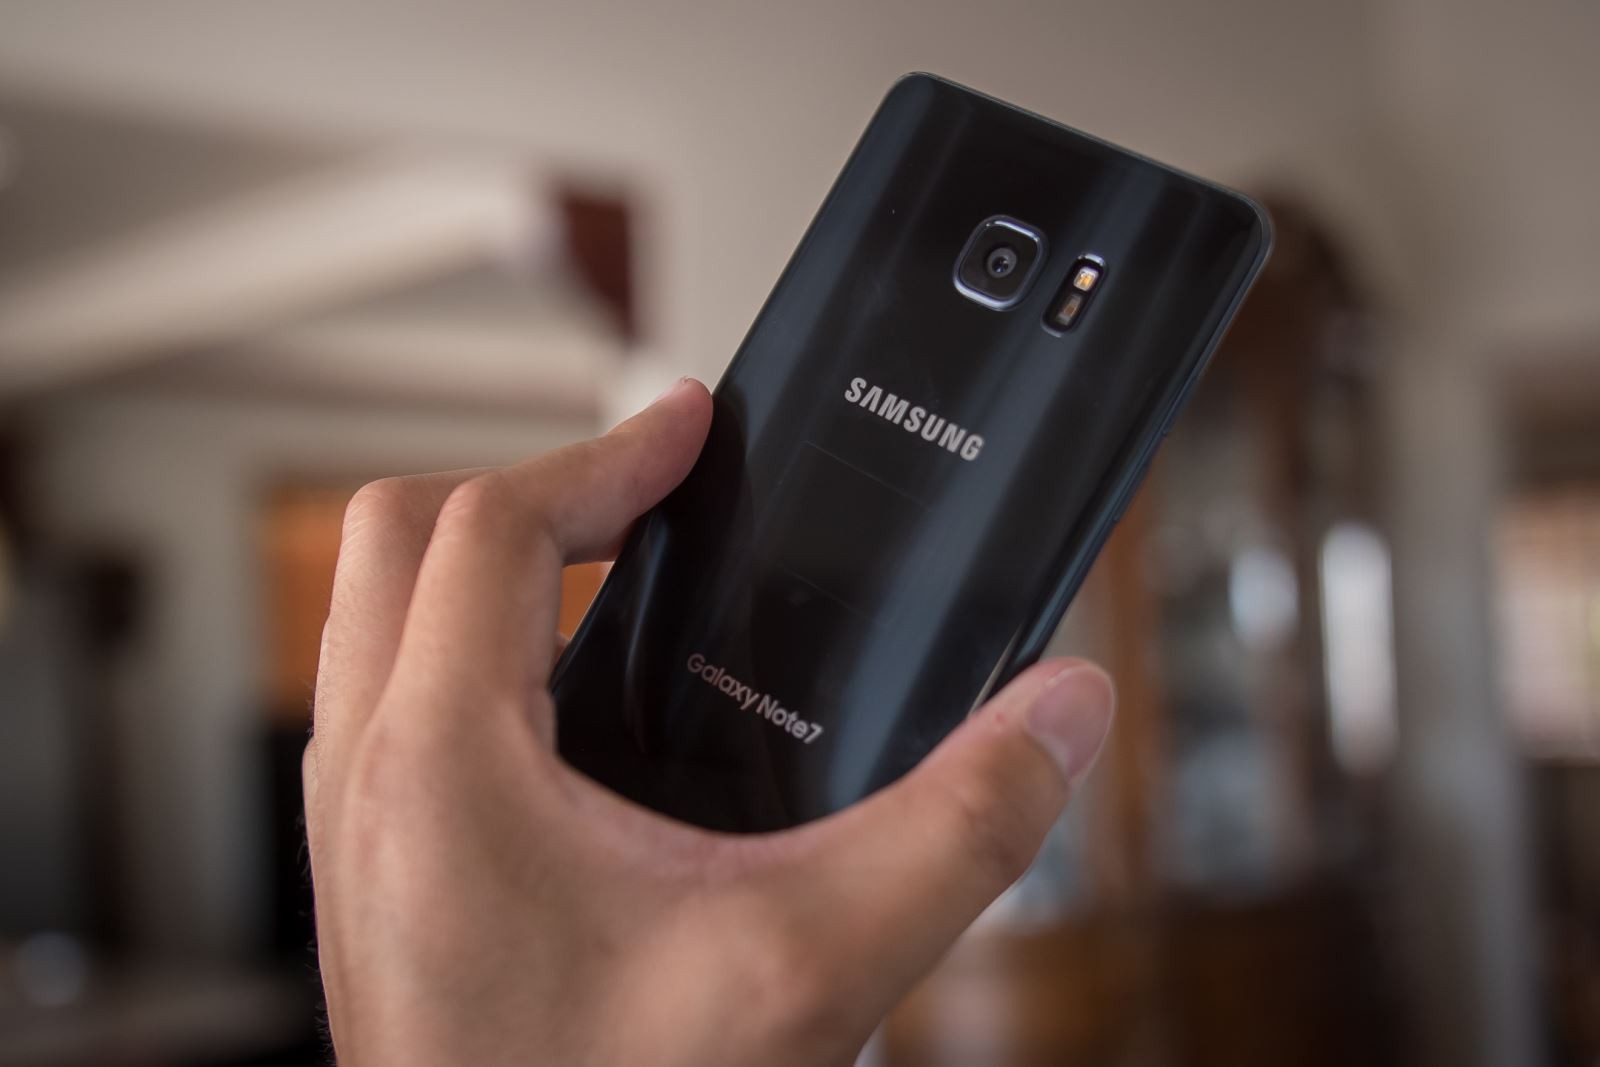 Samsung Galaxy Note 7 sử dụng pin lithium